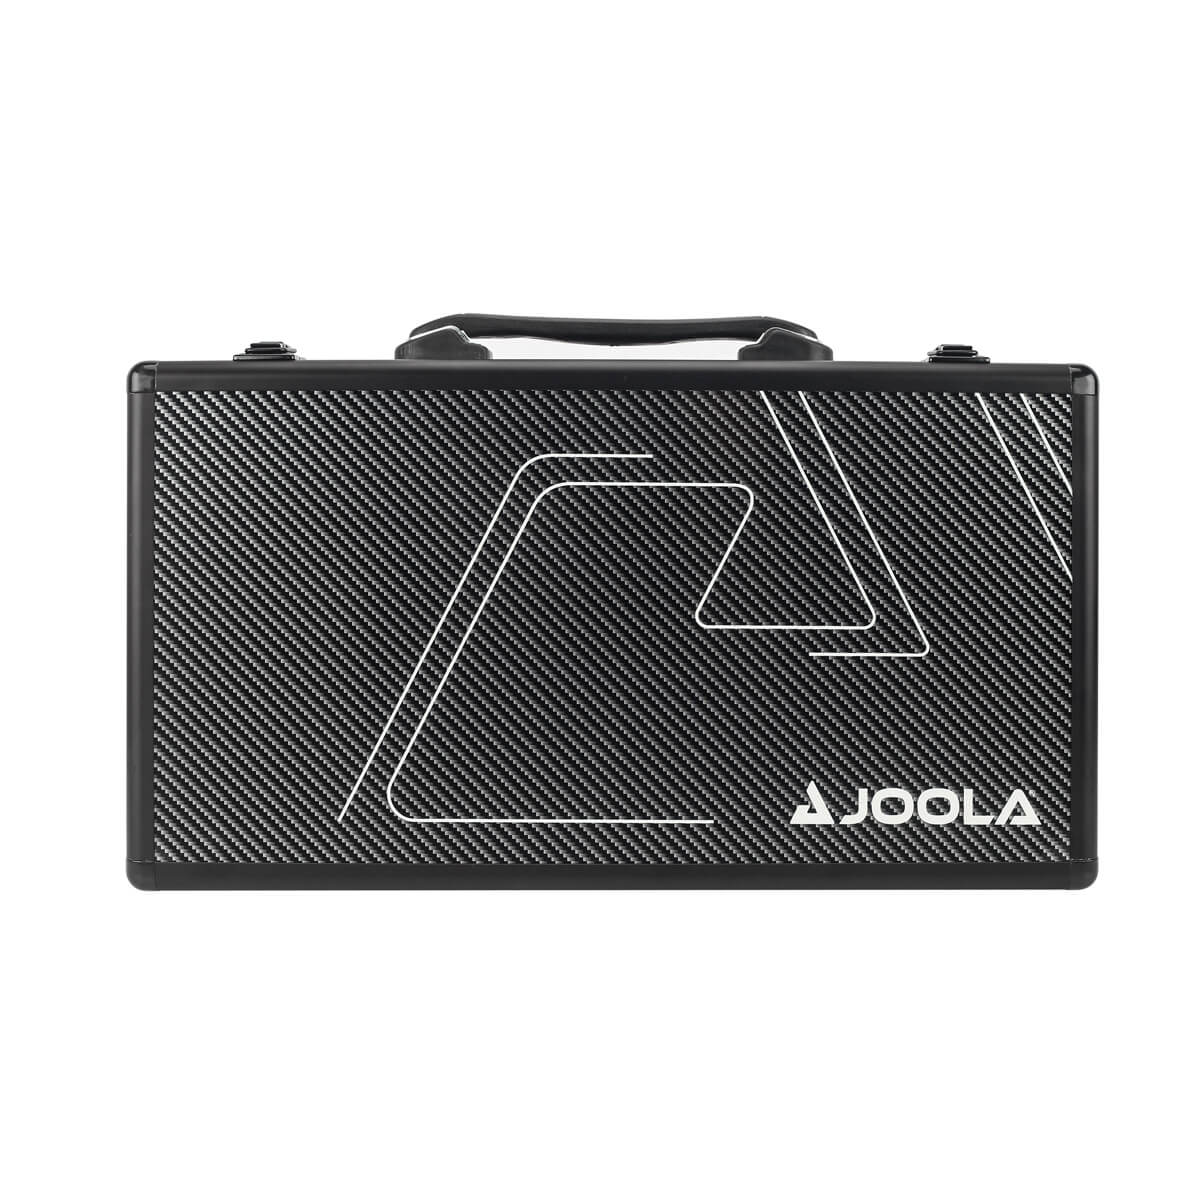 Joola Aluminum Pickleball Paddle Case